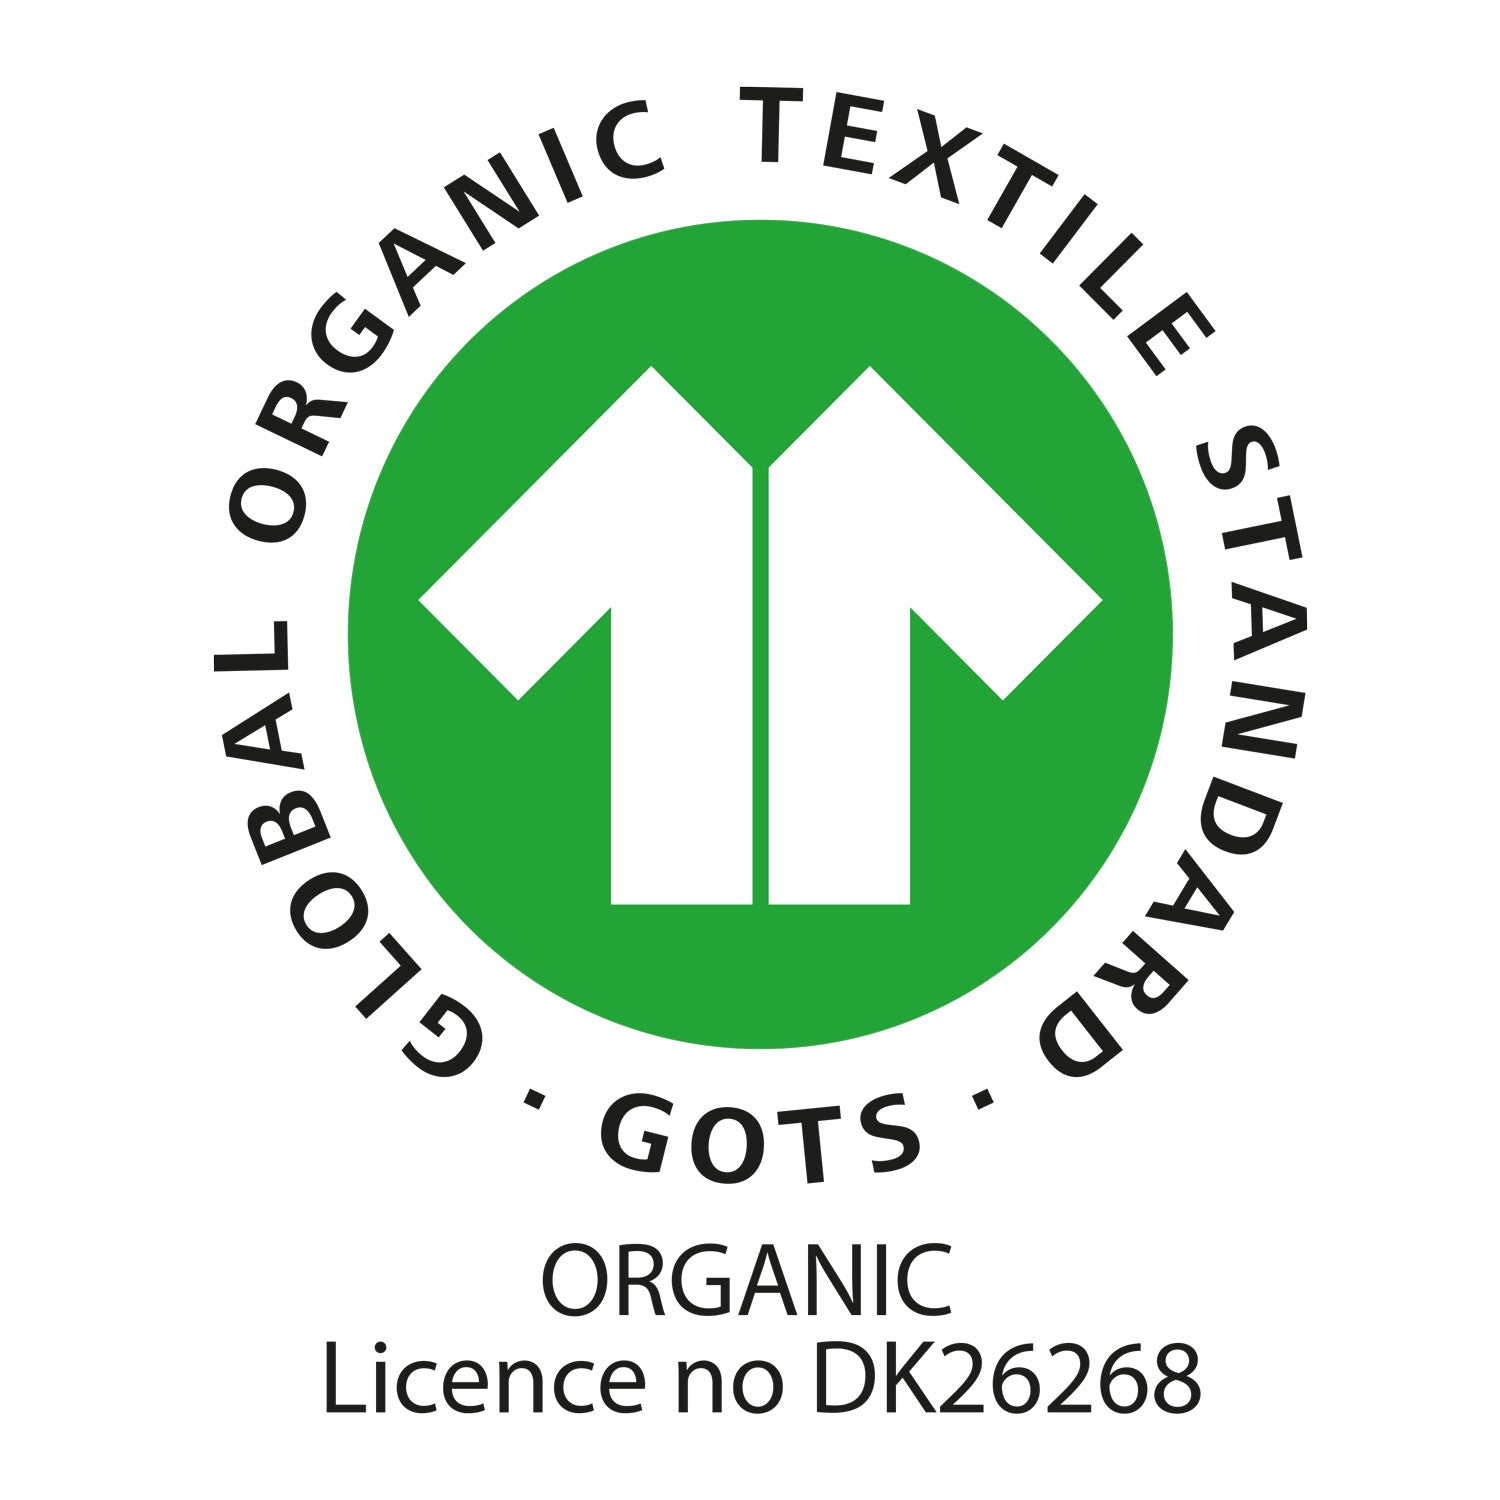 Organic Cotton Sleeveless Dress - Strawberry Fields | Piccalilly